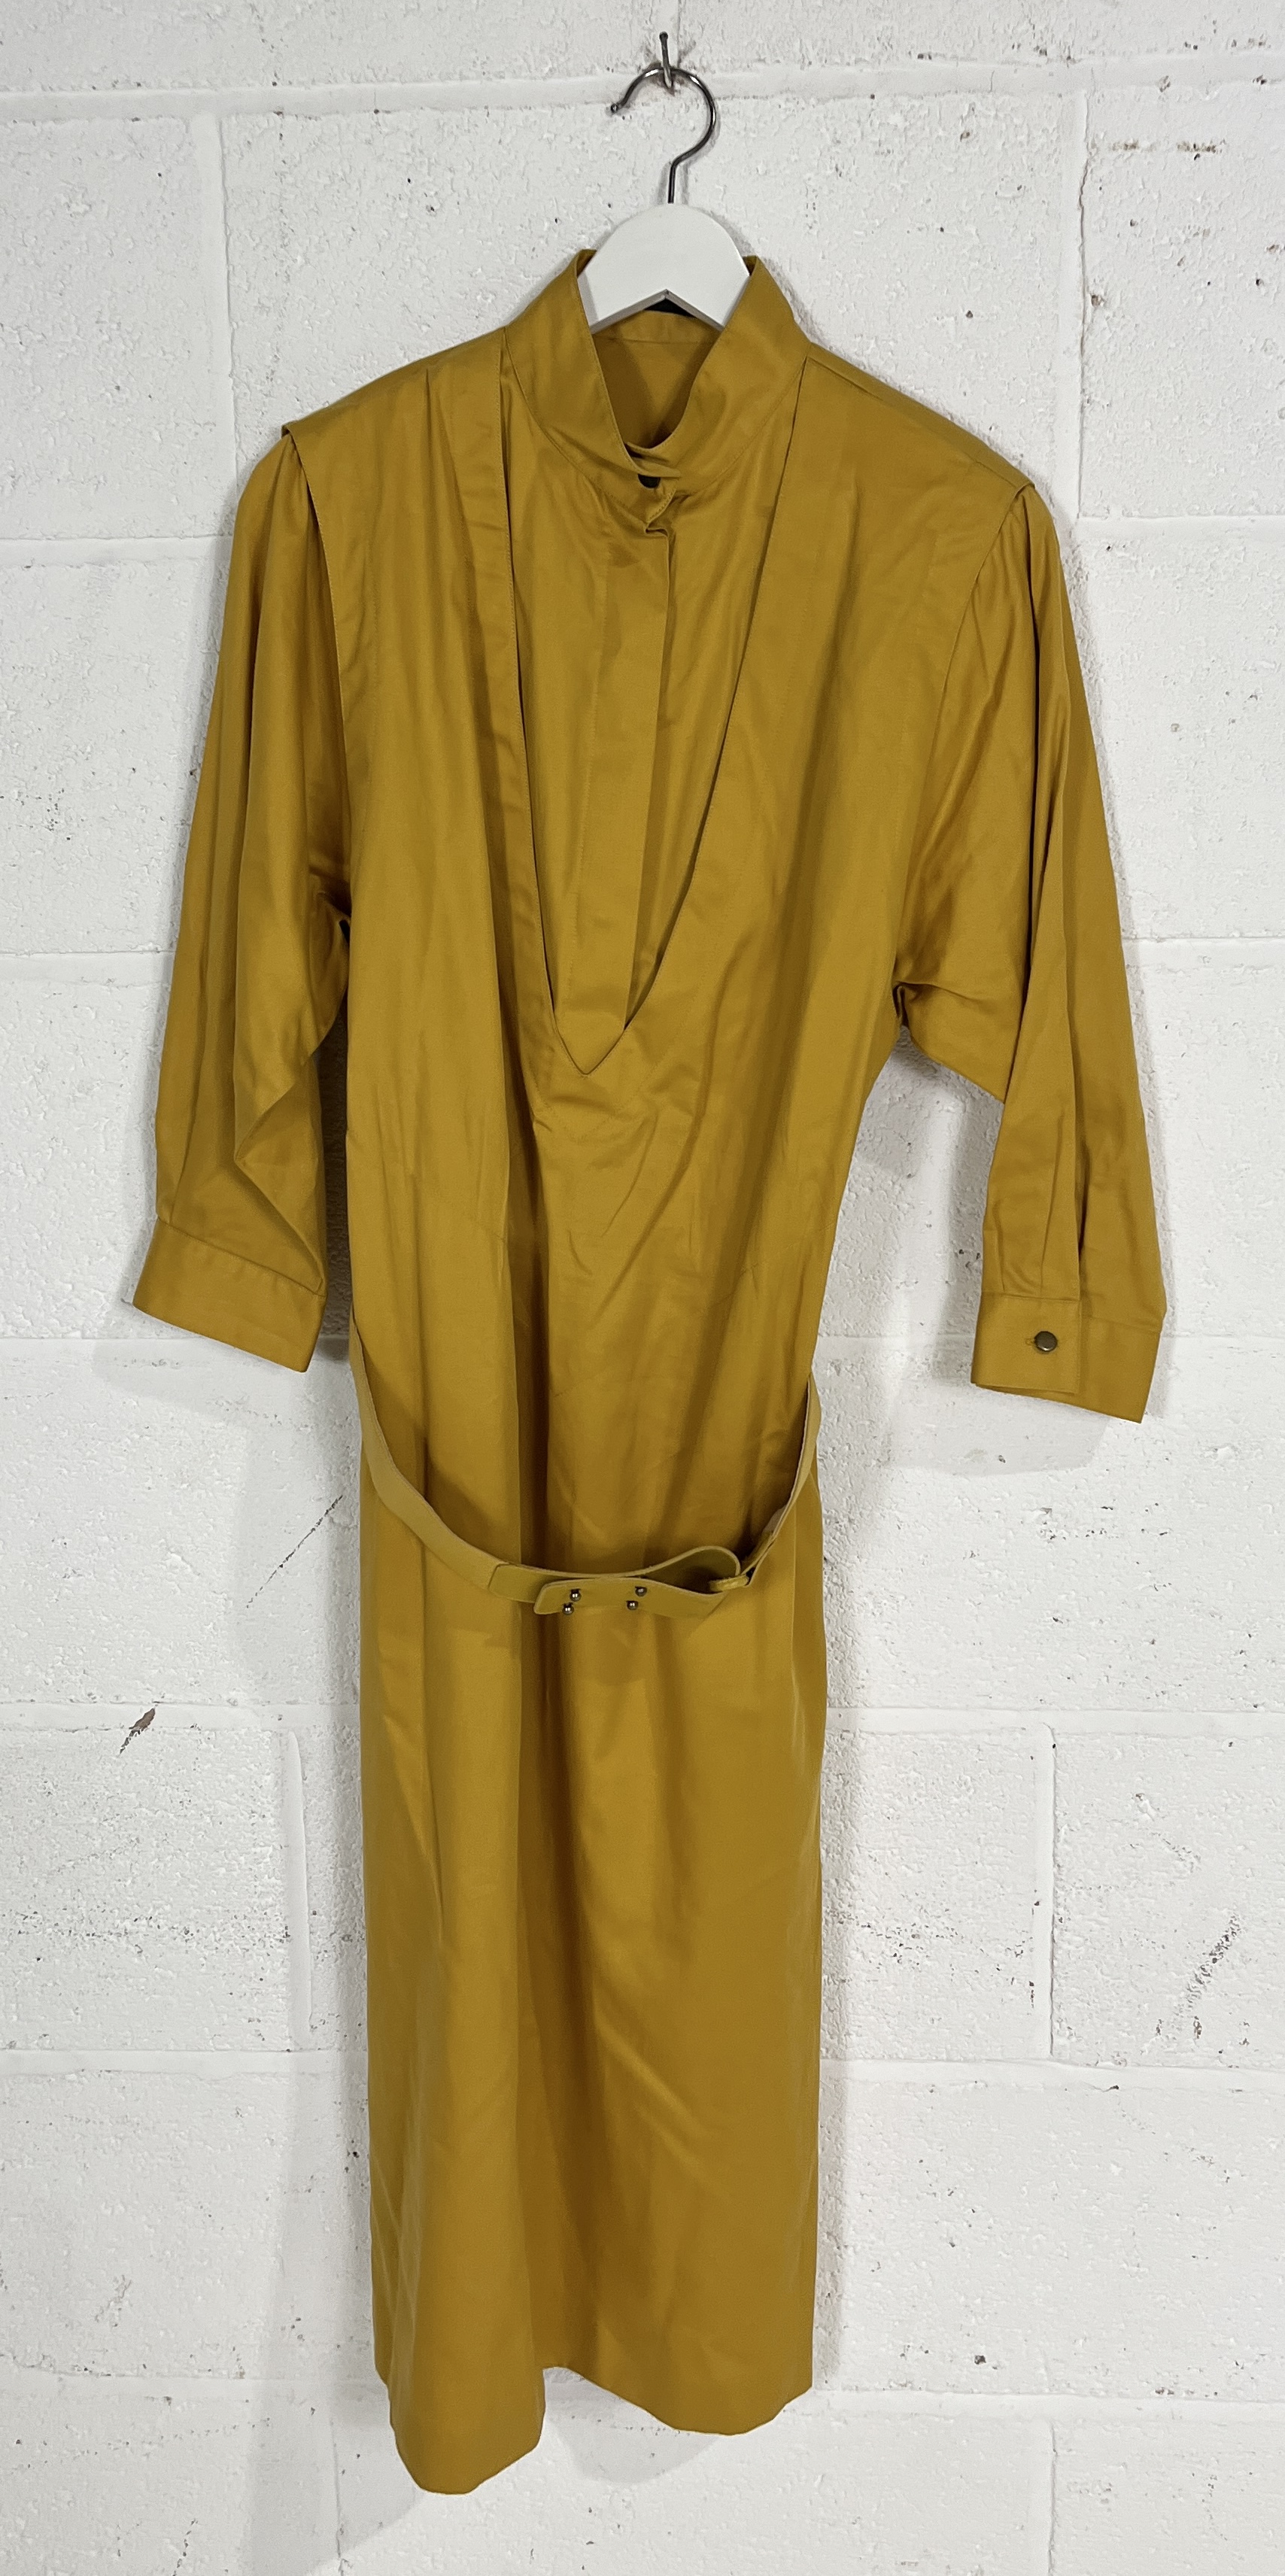 A vintage Louis Feraud yellow Kaftan dress and belt UK size 12 - Image 5 of 5